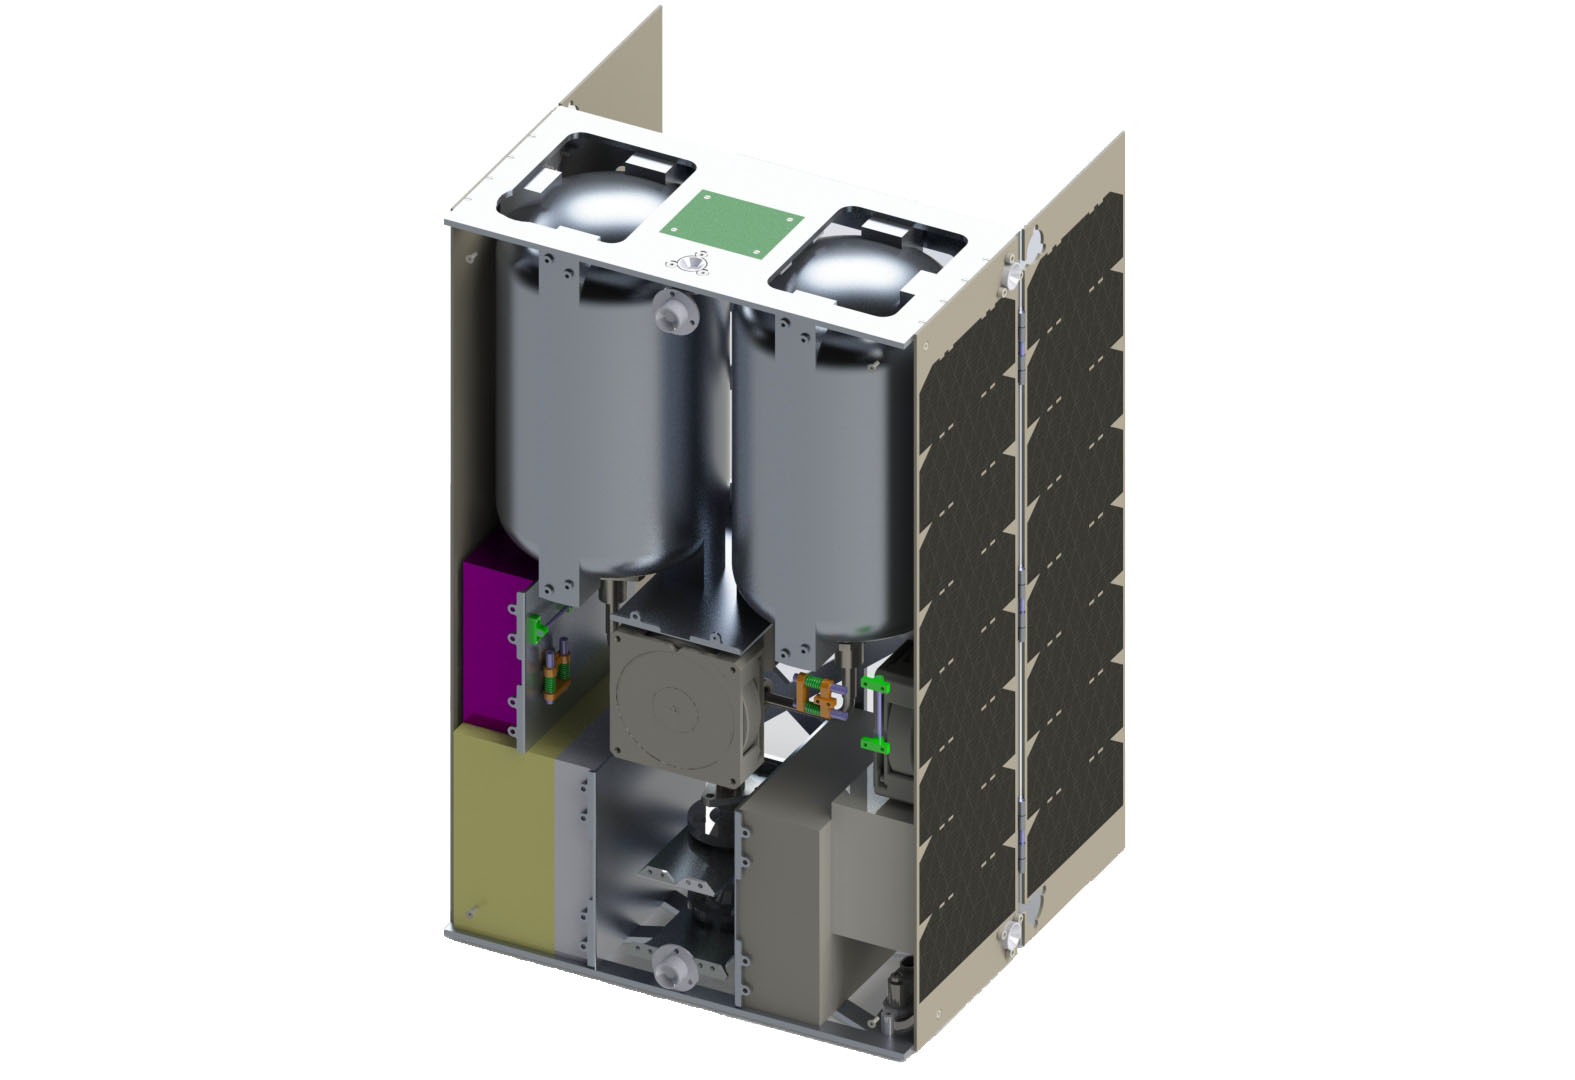 Triteia spacecraft is designed for maneuvering into lunar orbit. 